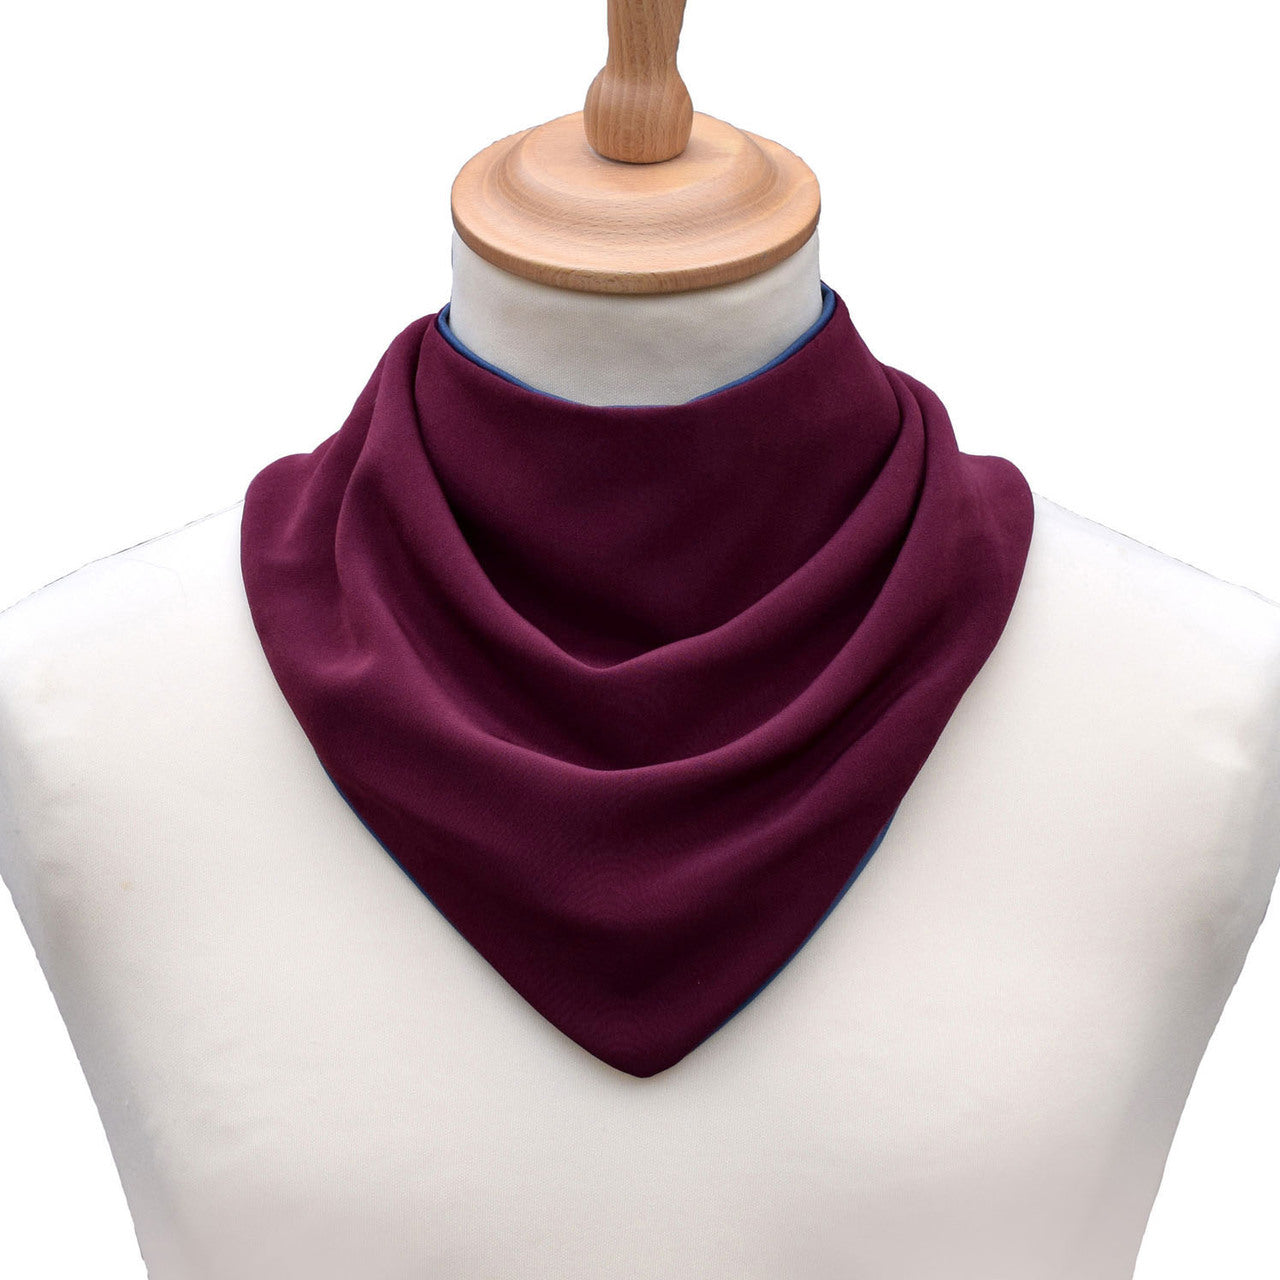 Neckerchief style dribble bib - Burgundy | Health Care | Care Designs